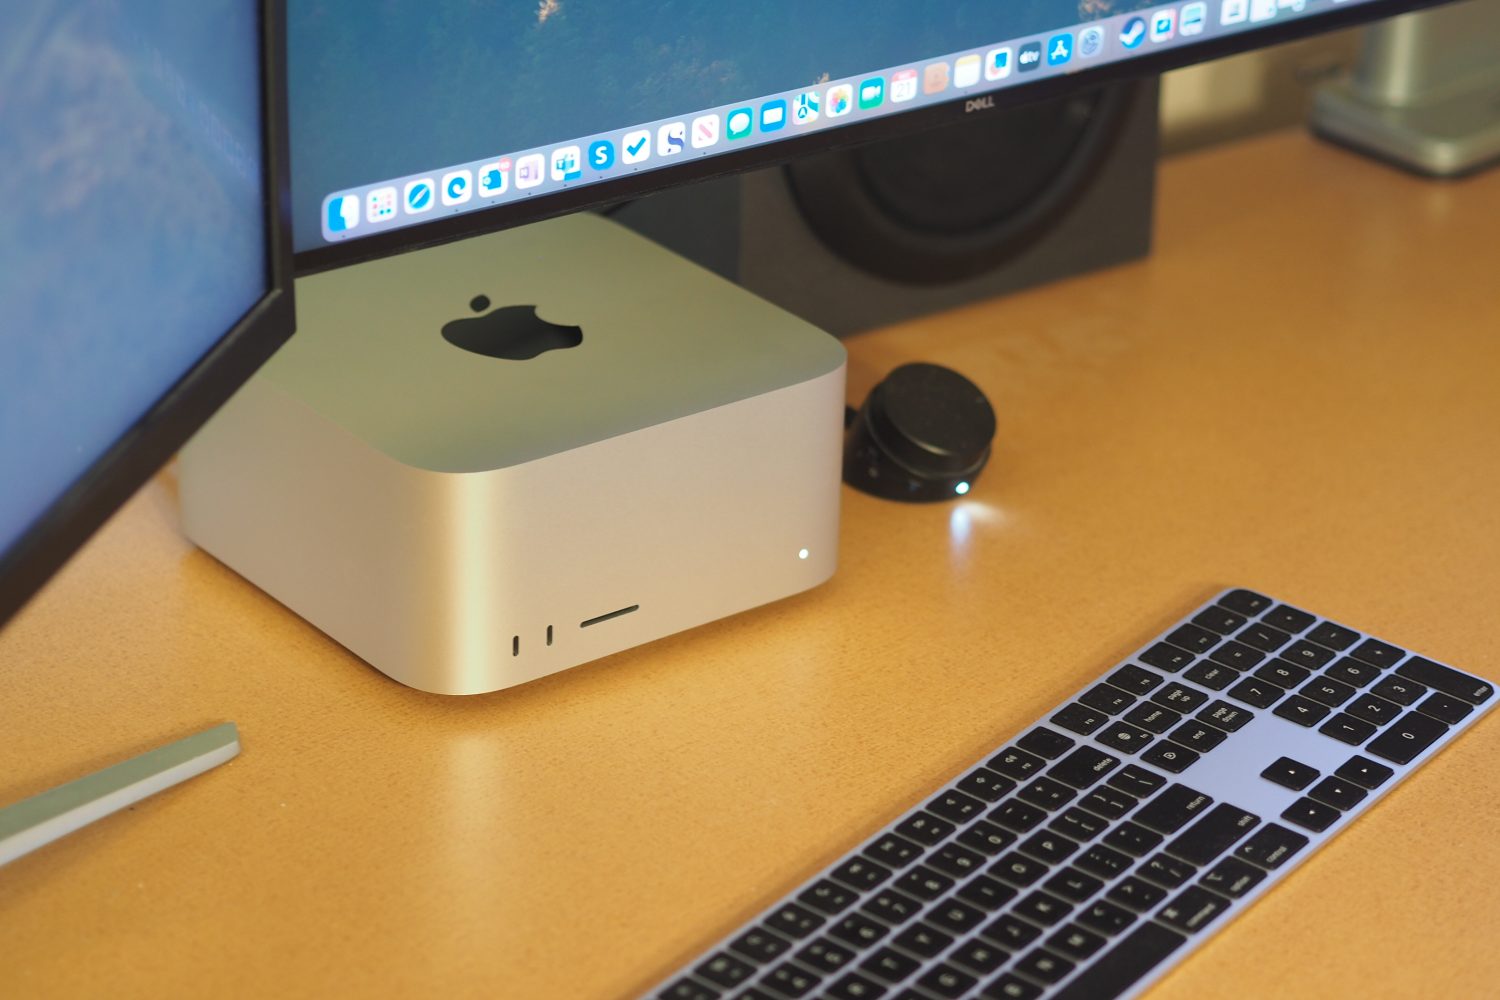 Mac Studio review: can it replace my Windows desktop PC?